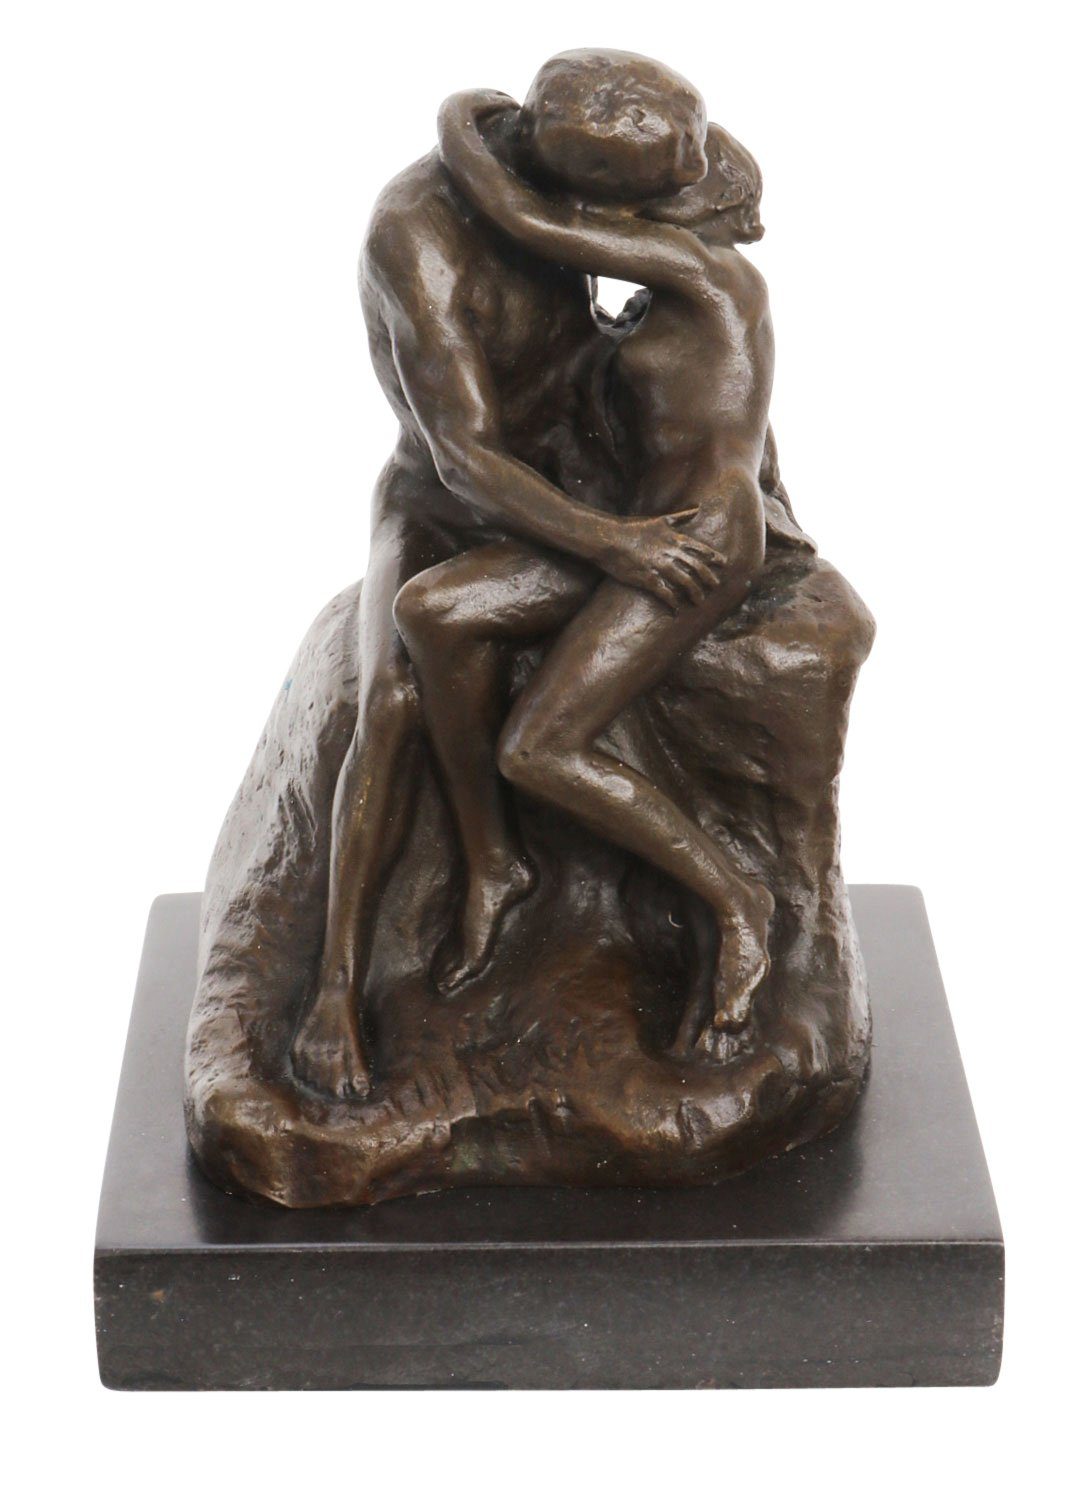 Figur Aubaho Kuss Rodin nach Antik-Stil Bronze Replik Bronzeskulptur der Skulptur